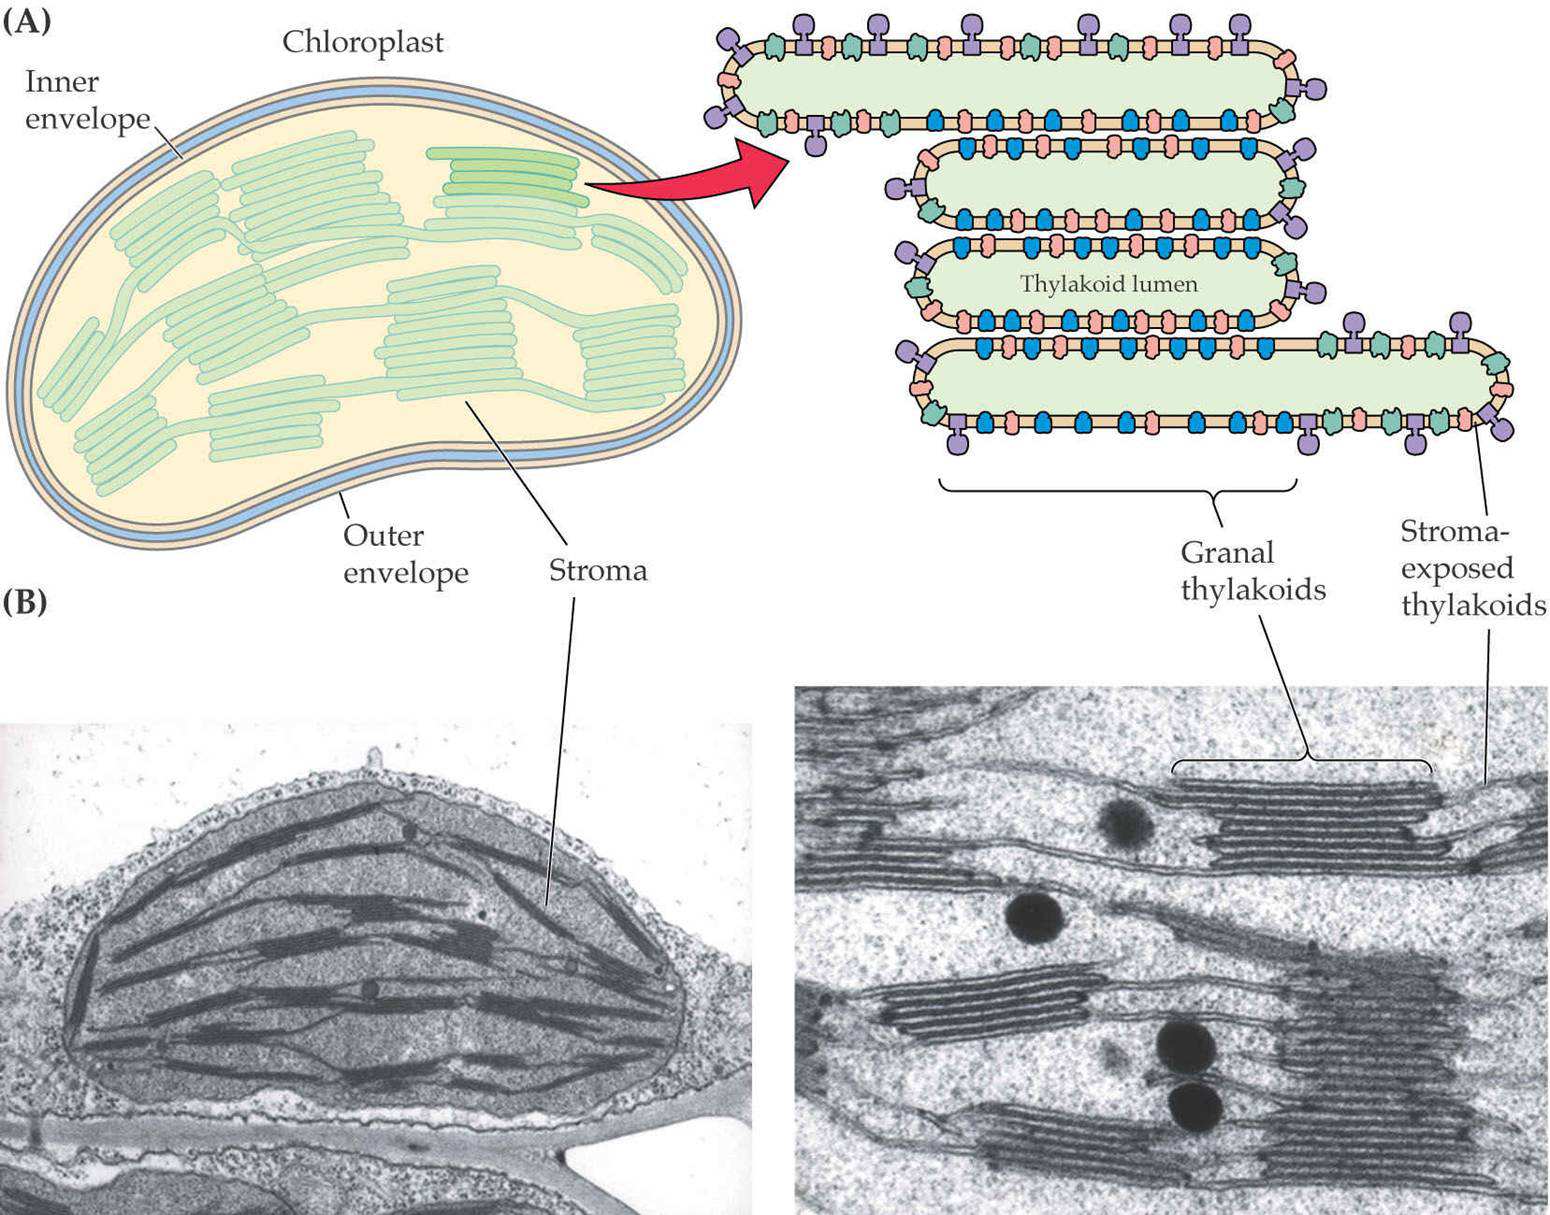 Chloroplast -